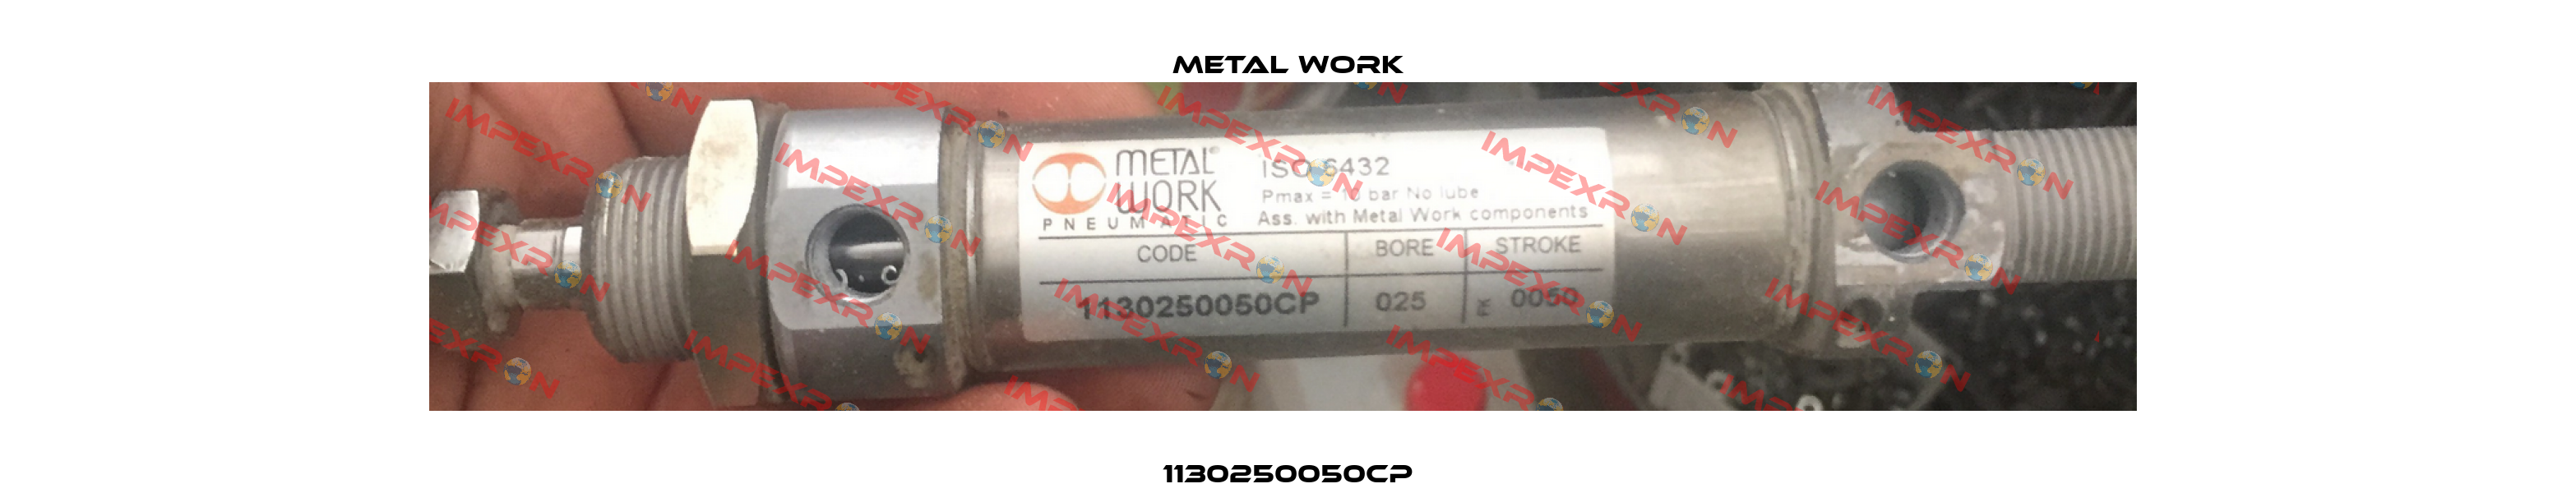 1130250050CP Metal Work